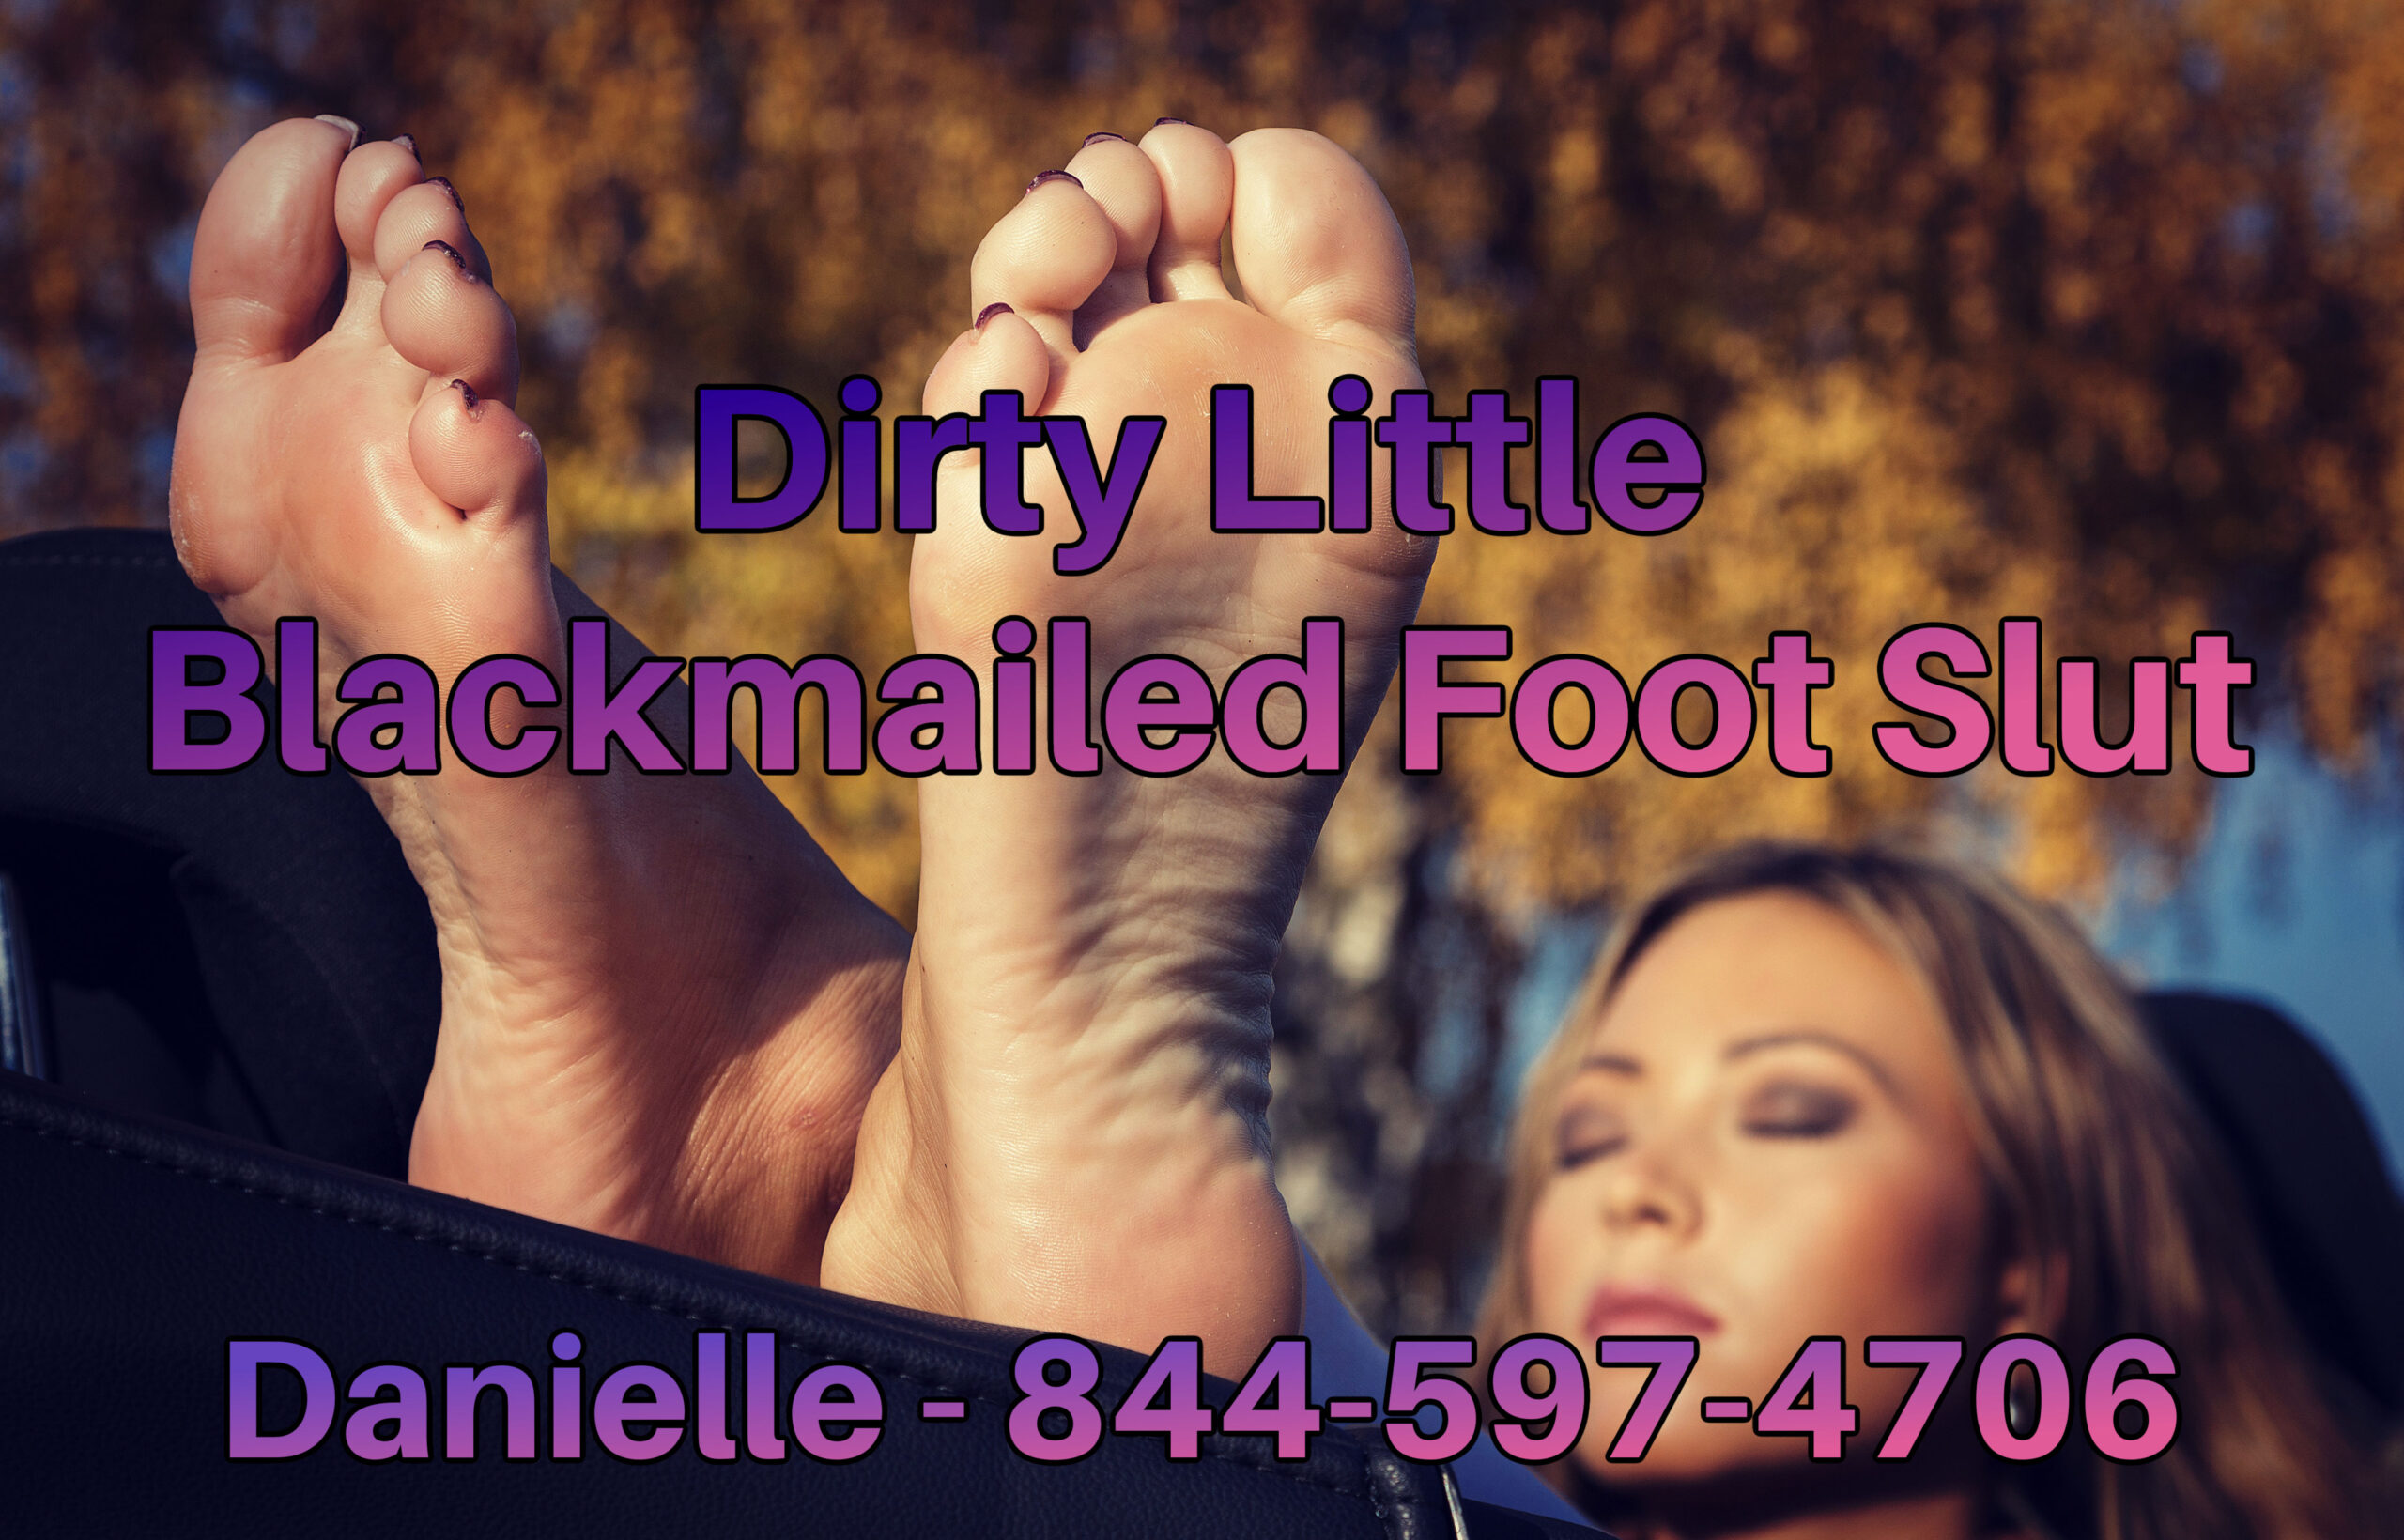 Foot Fetish Danielle